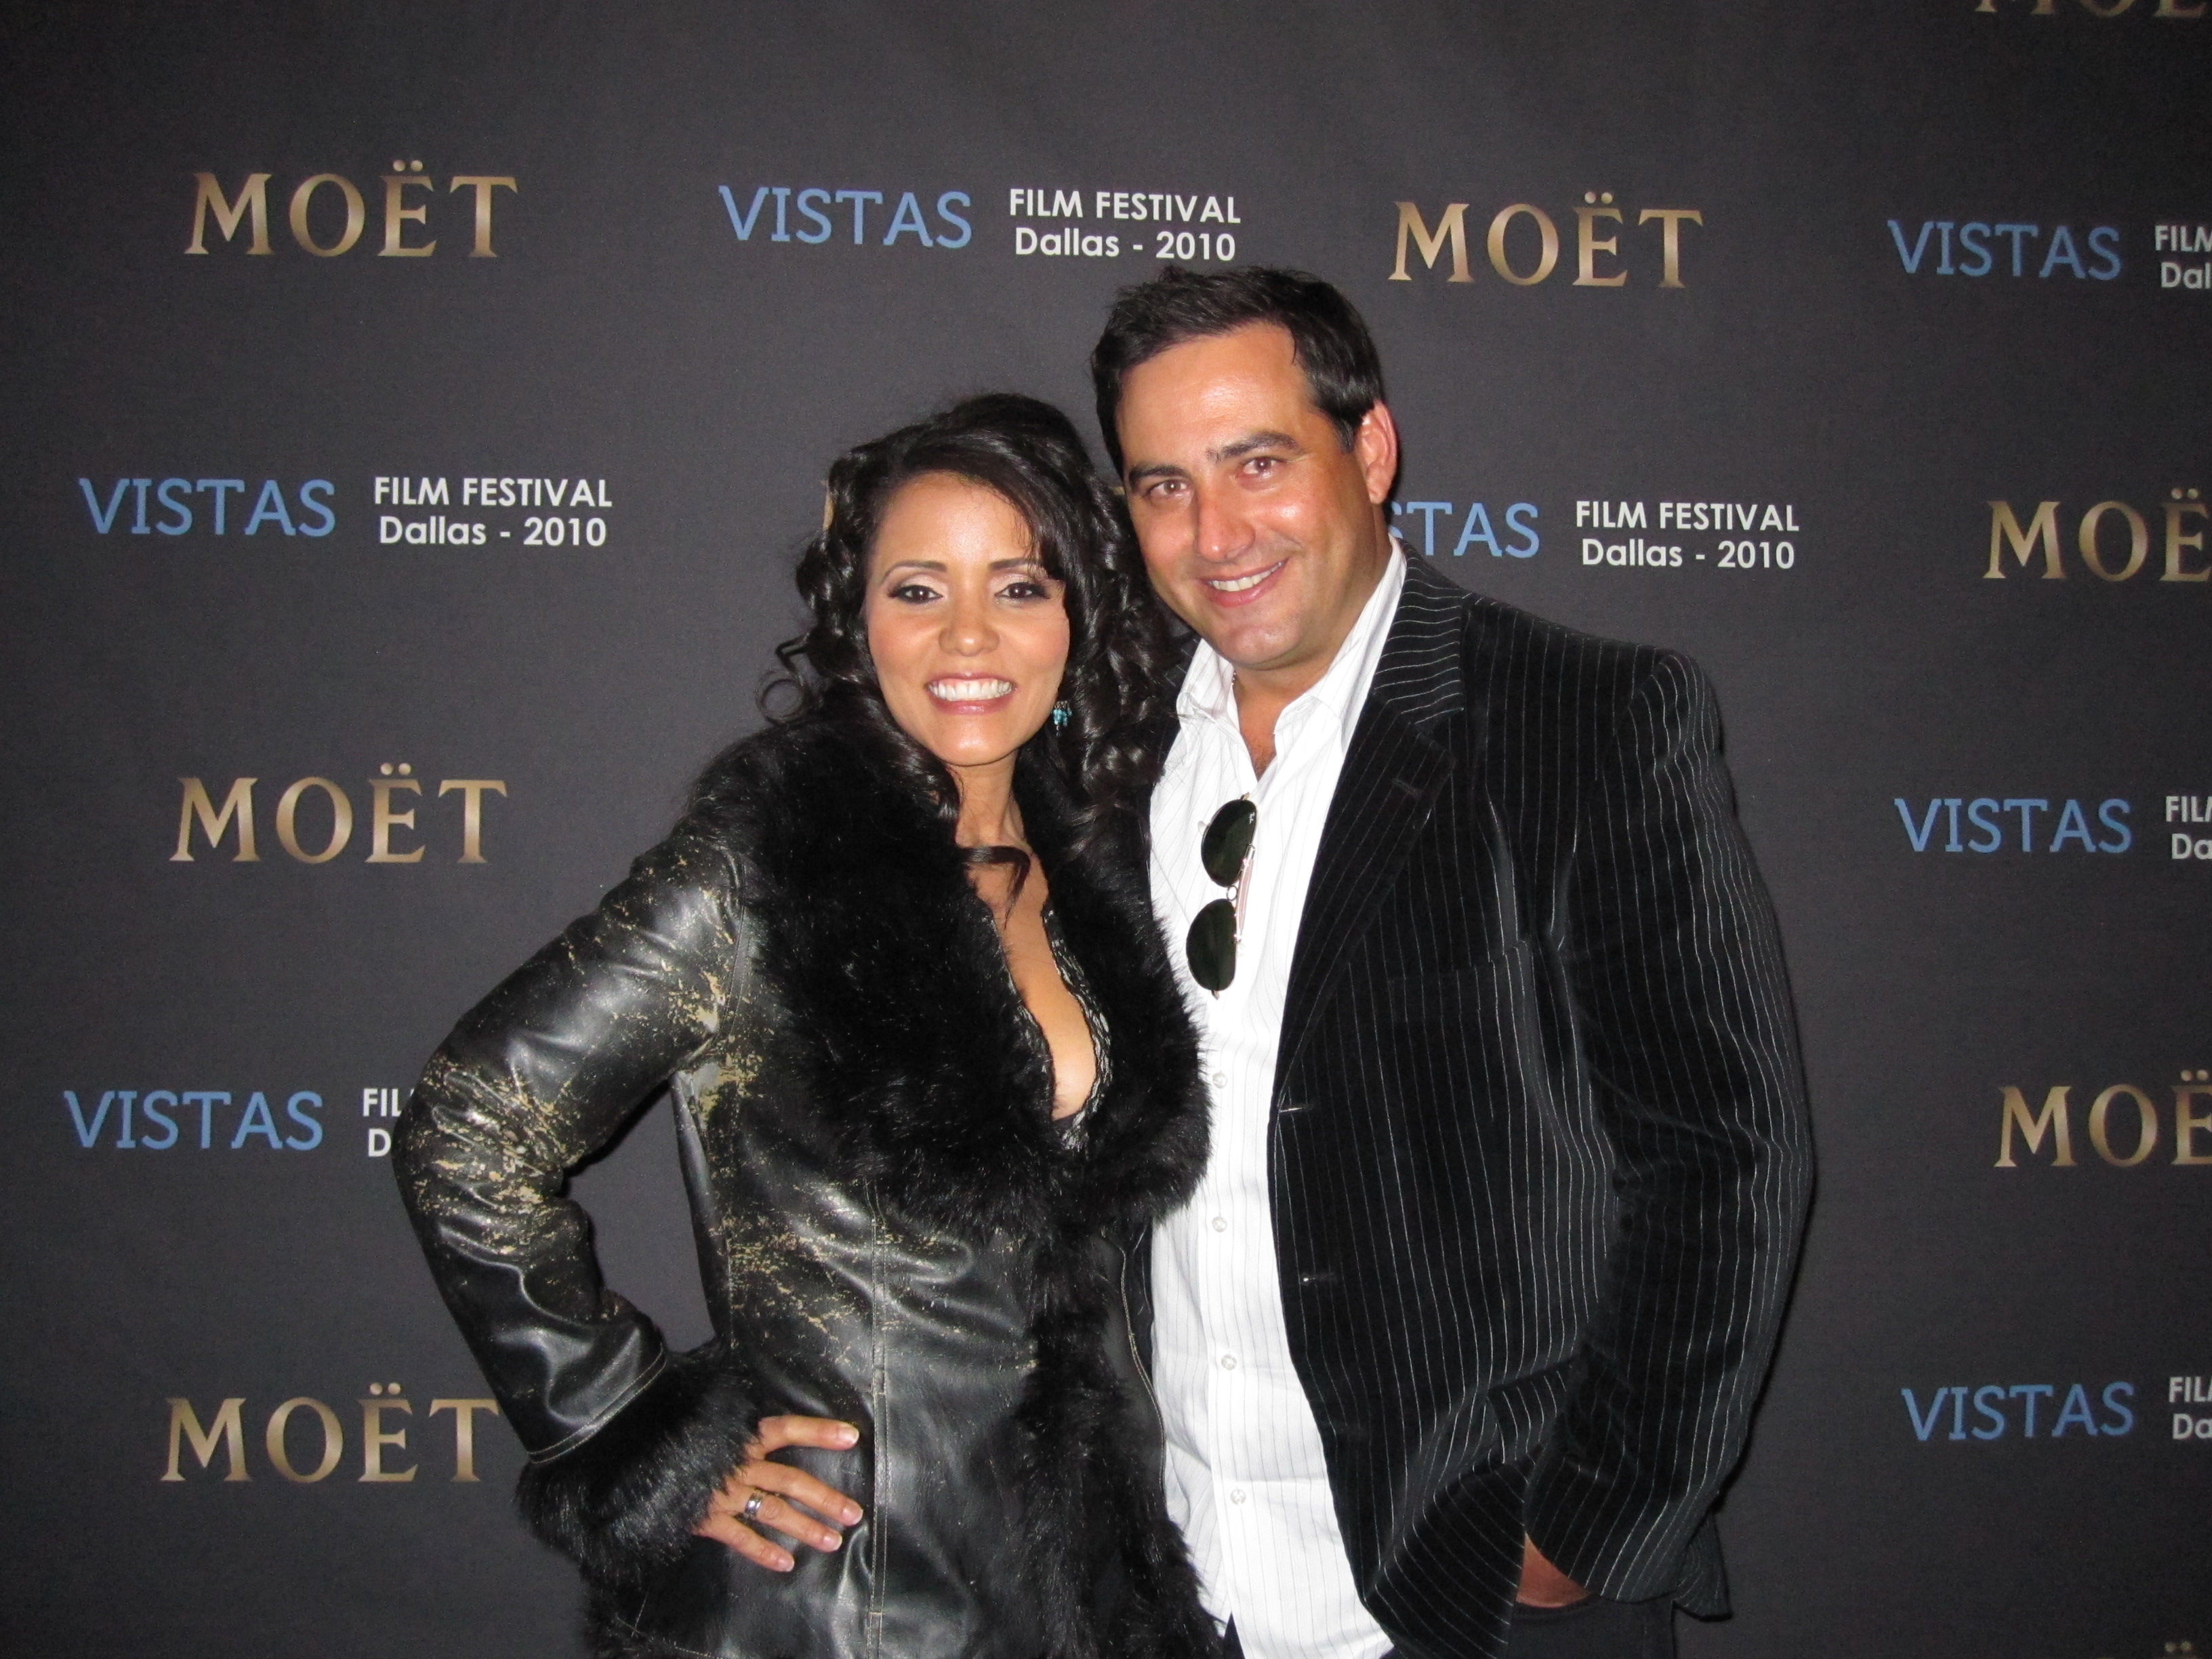 Miranda Martinez with actor Rene Lavan at the 2010 Vistas Film Festival